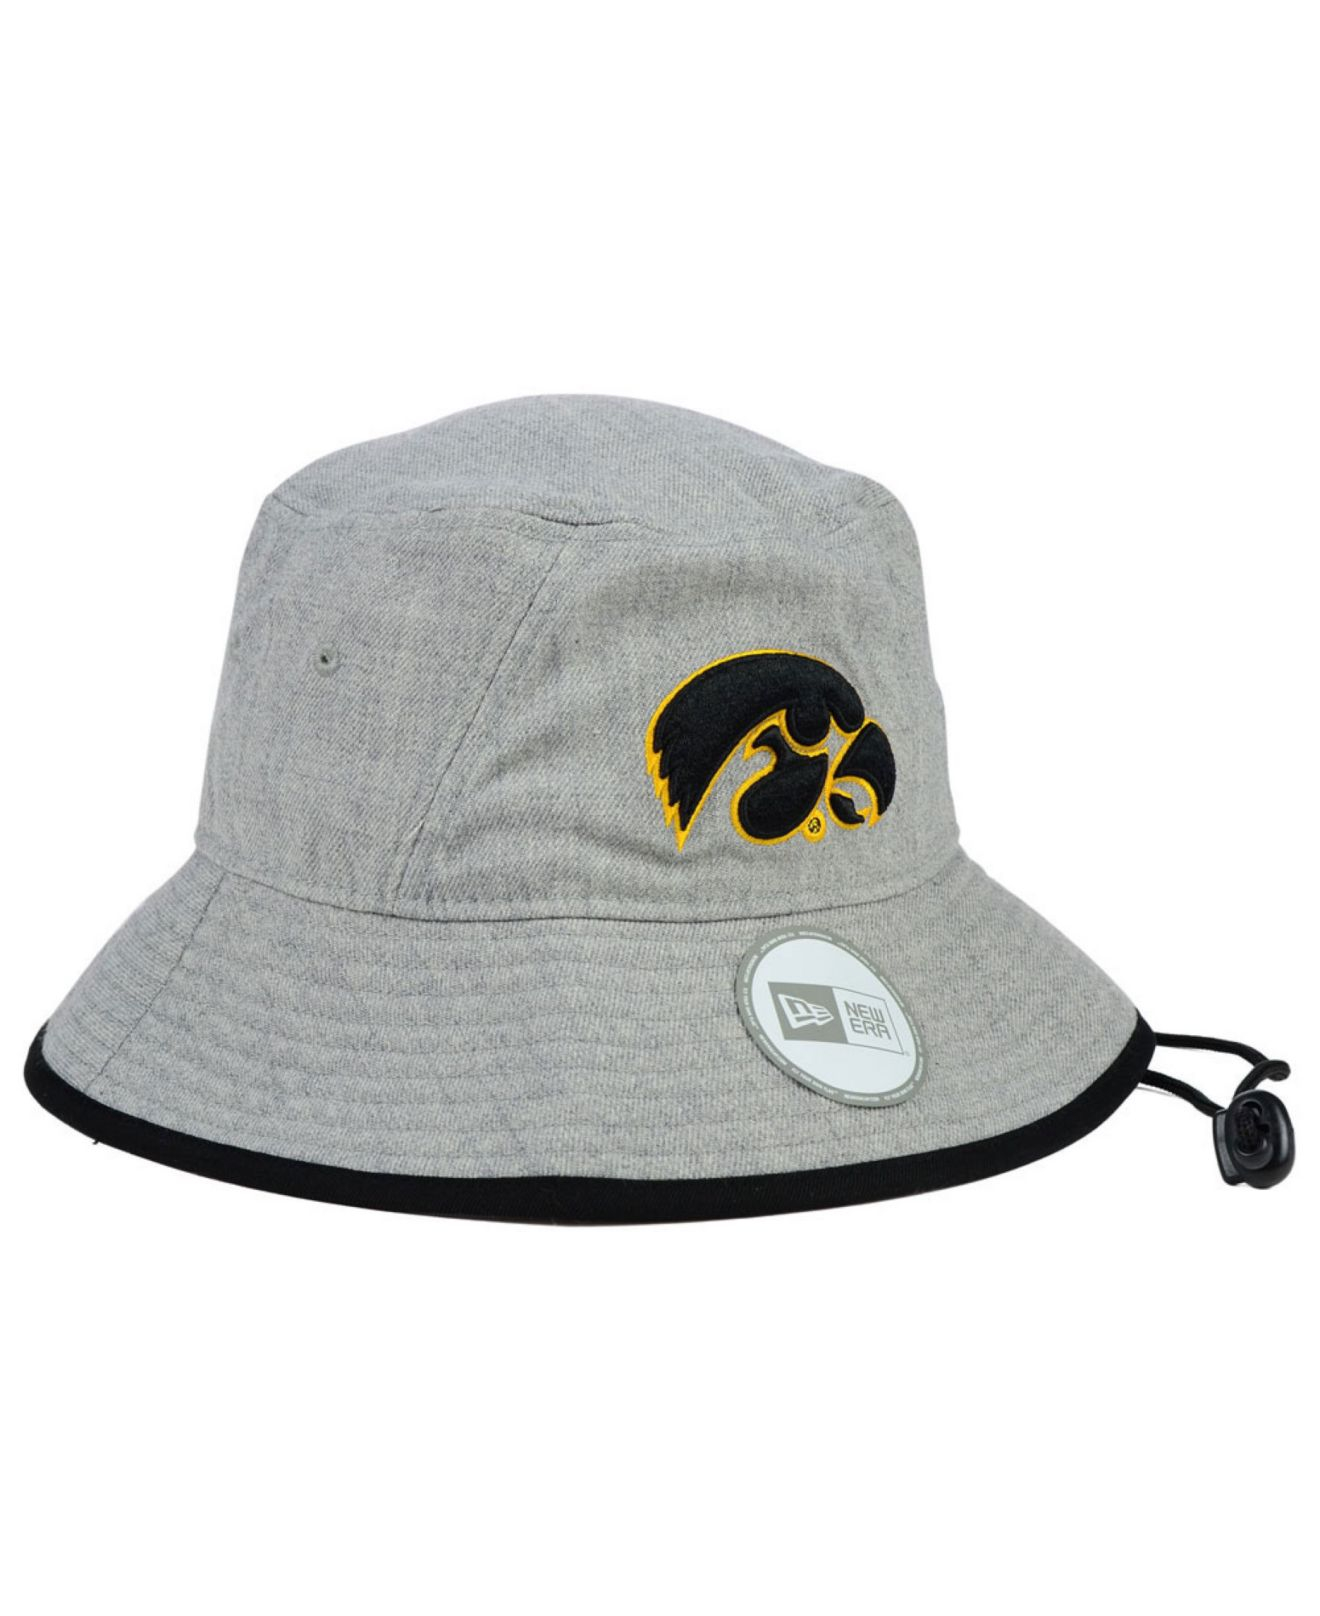 KTZ Iowa Hawkeyes Tip Bucket Hat in Gray for Men - Lyst